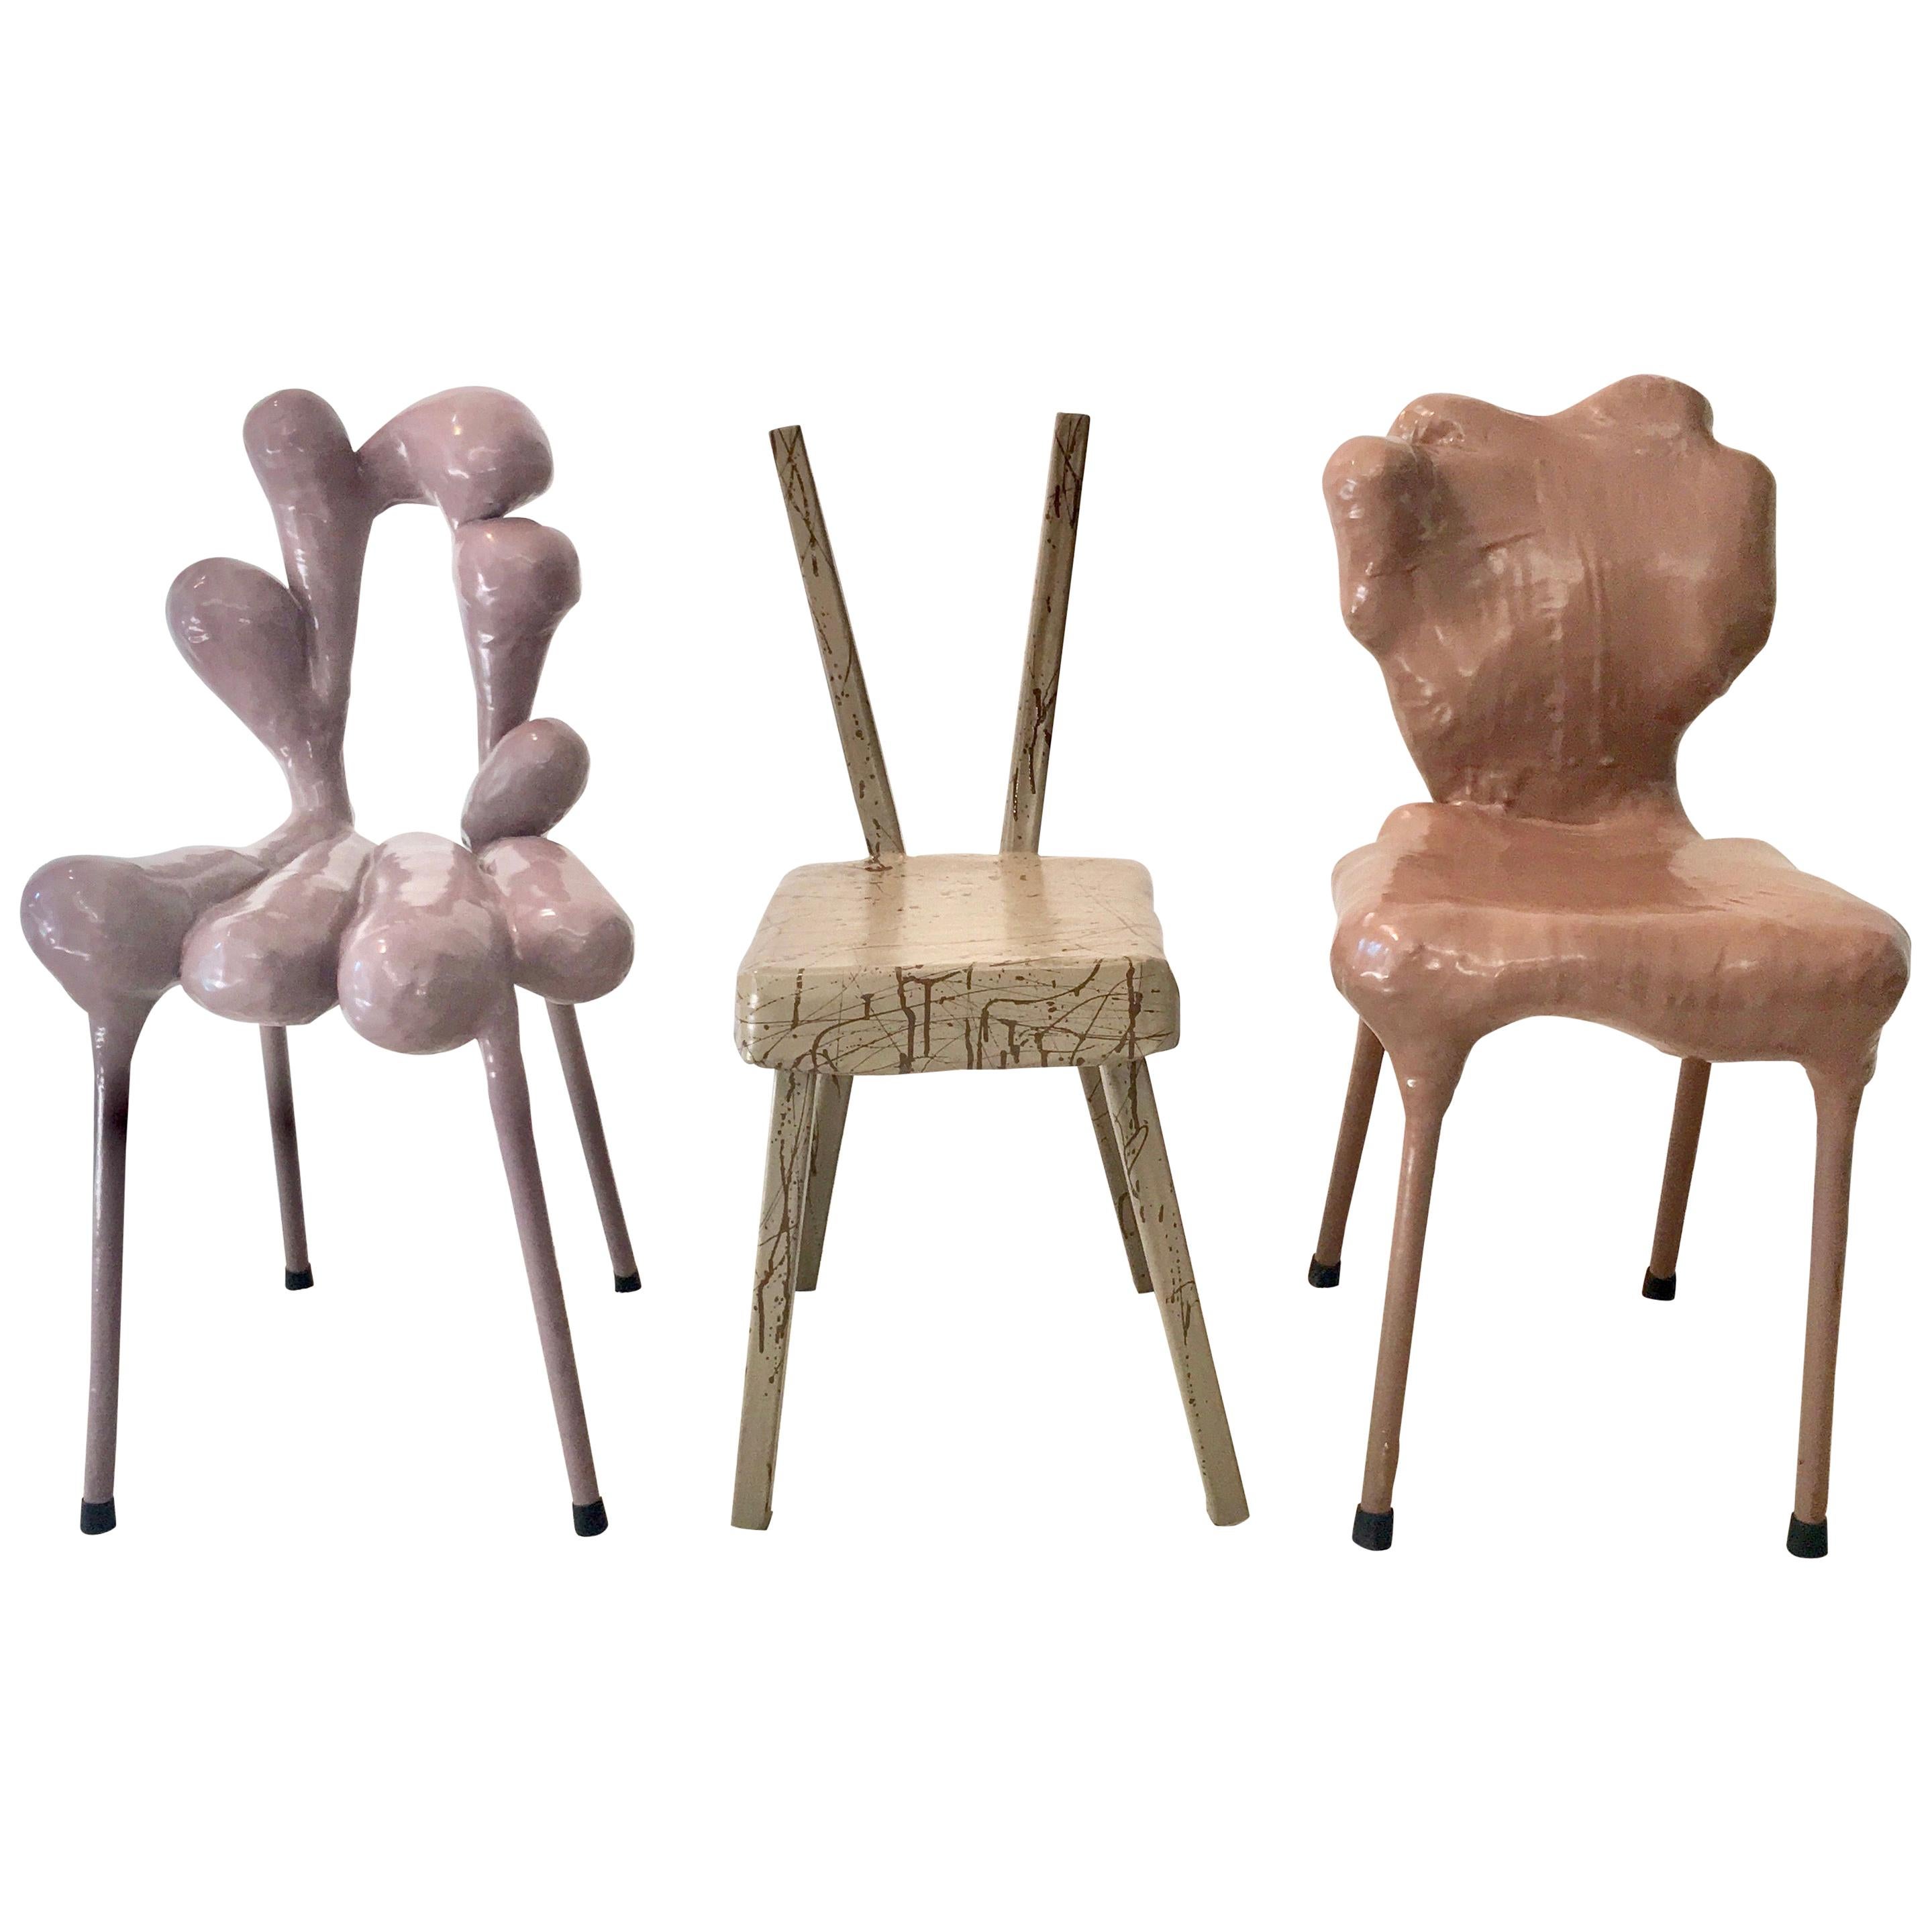 Surrealist Chairs by Tessa Koot